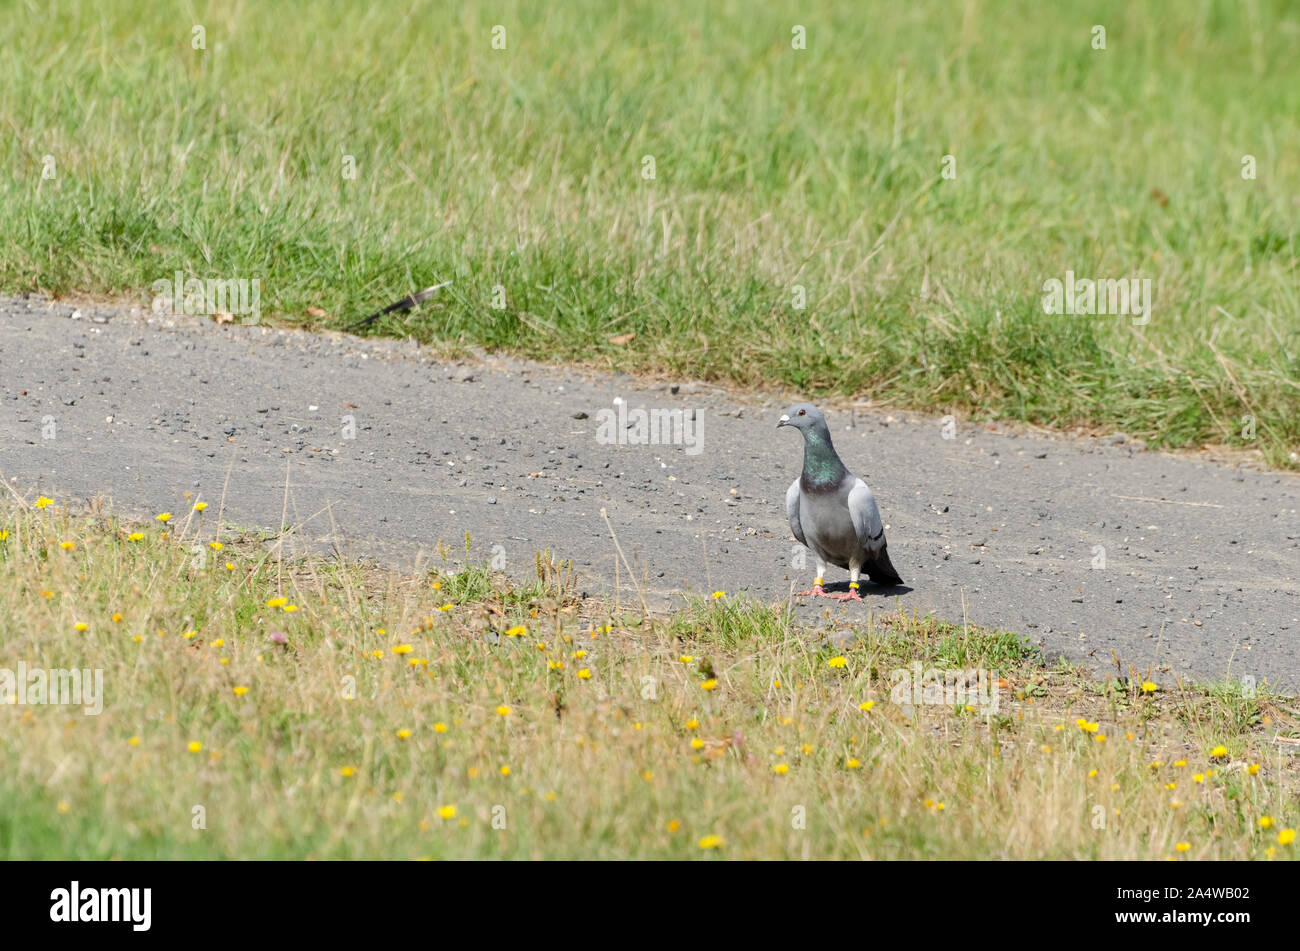 Rock pigeon, rock dove, Columba livia, auf dem Boden gepflasterte Straße Stockfoto